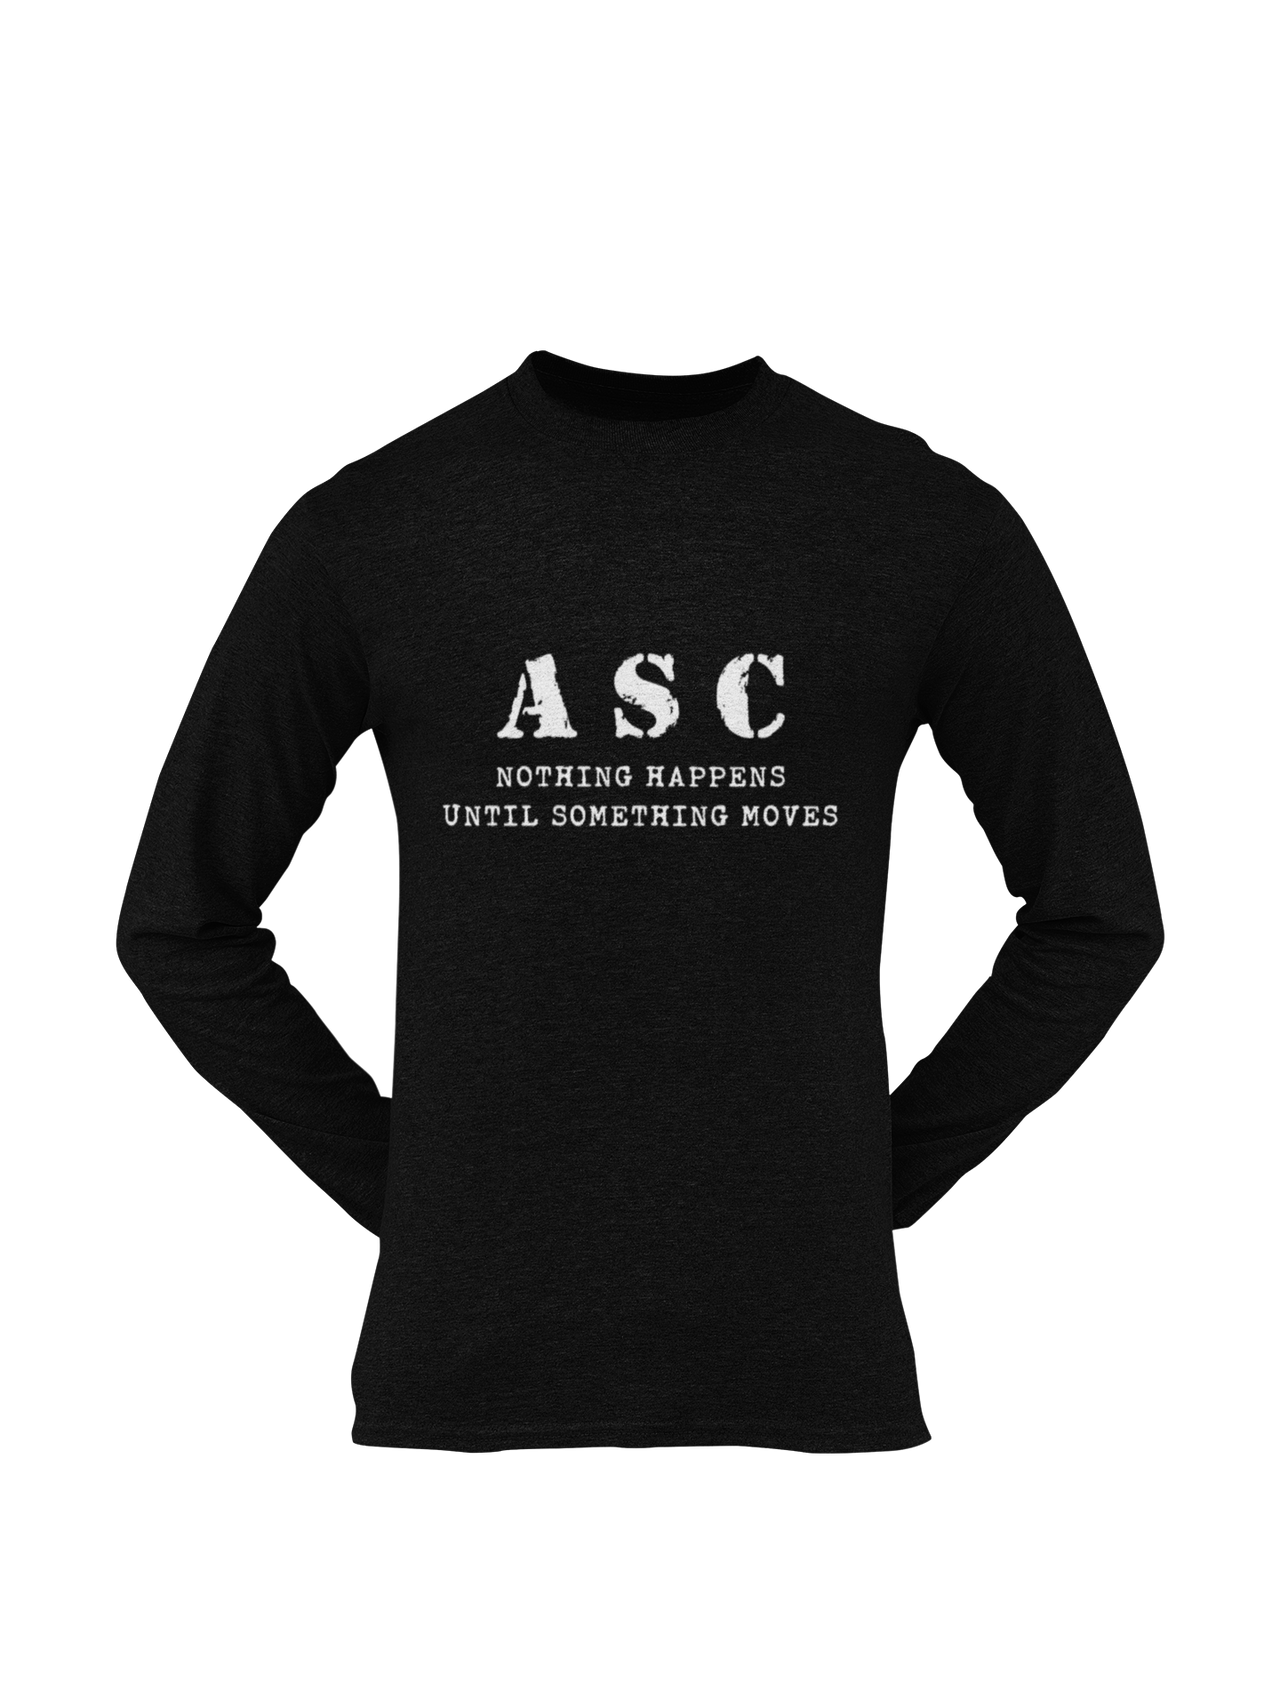 ASC T-shirt - ASC, Nothing Happens Until Something Moves (Men)